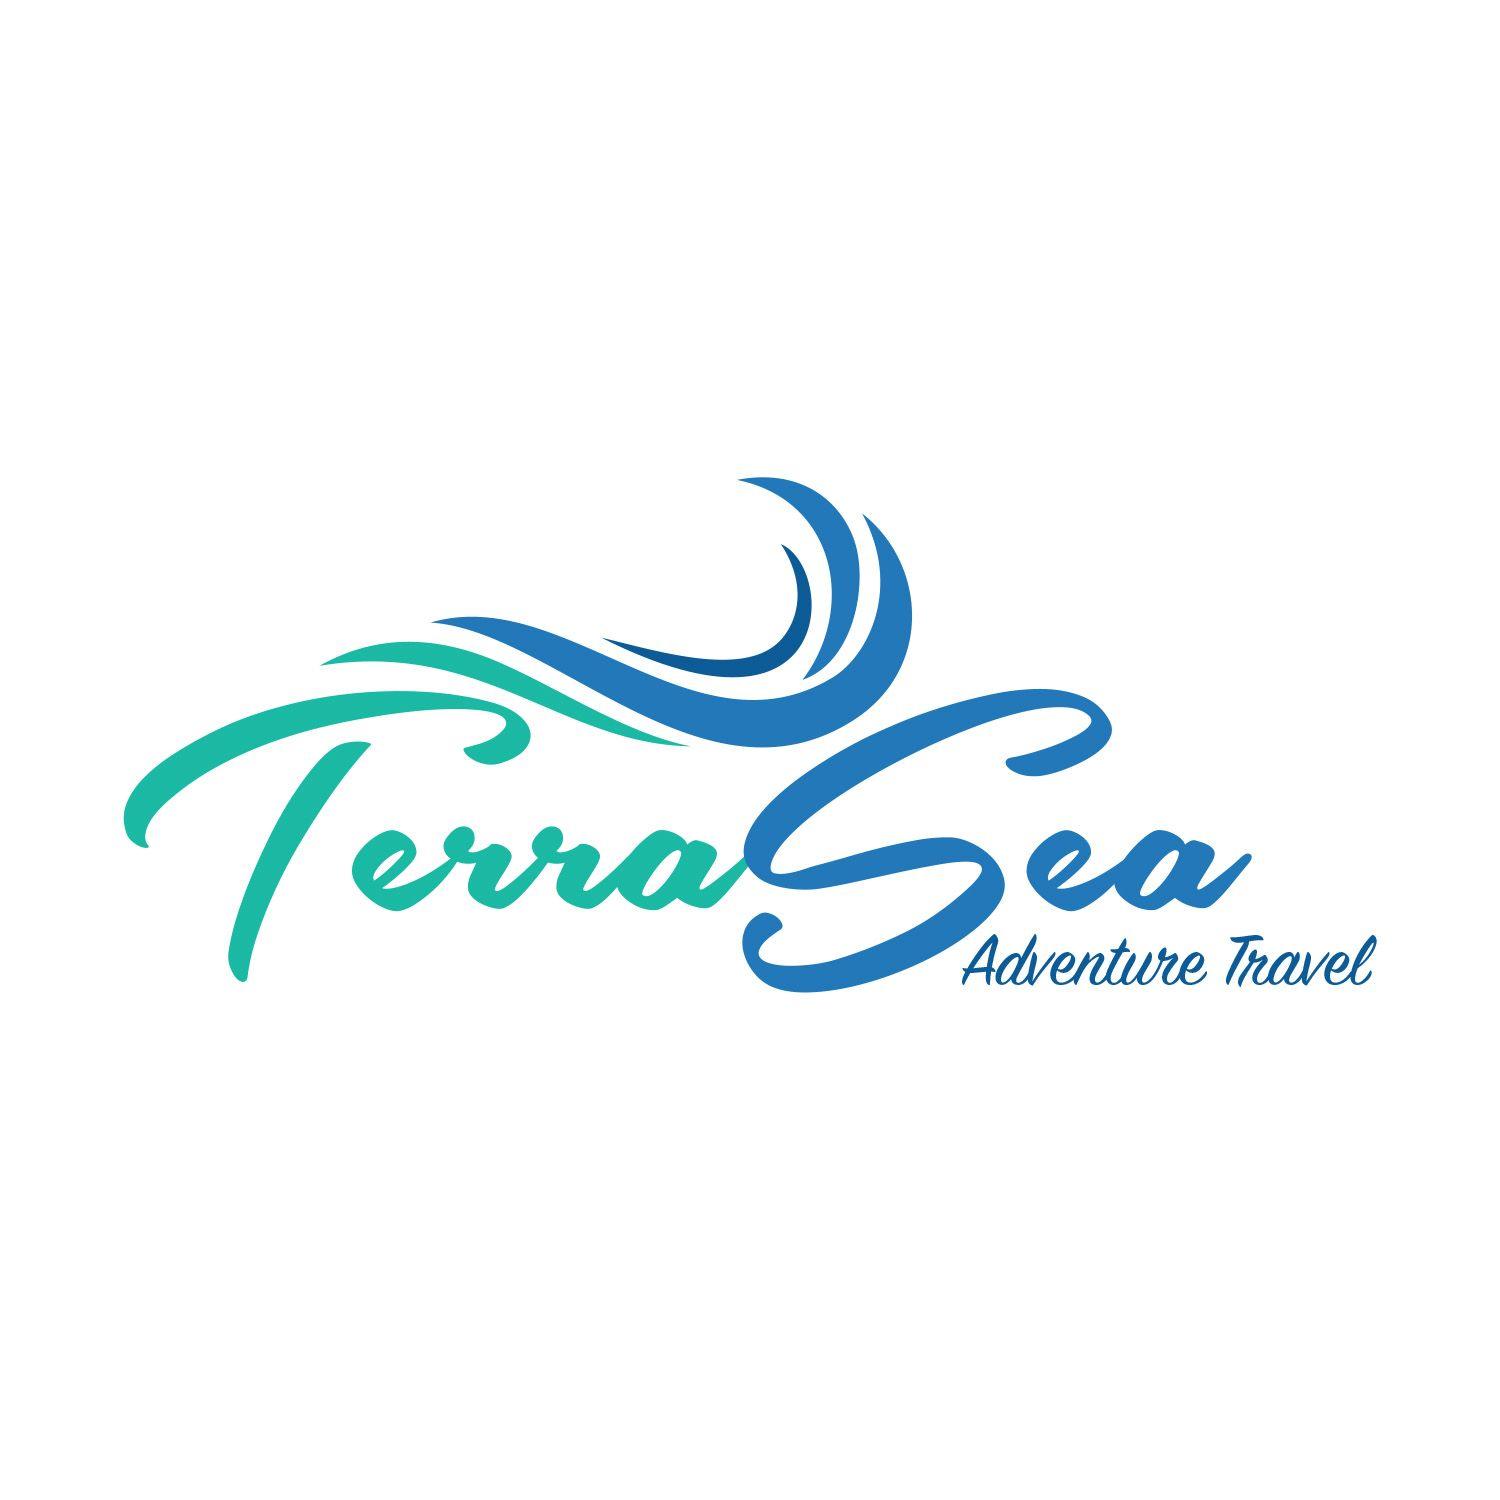 Janssen Logo - Bold, Playful, Travel Agent Logo Design for TerraSea Adventure